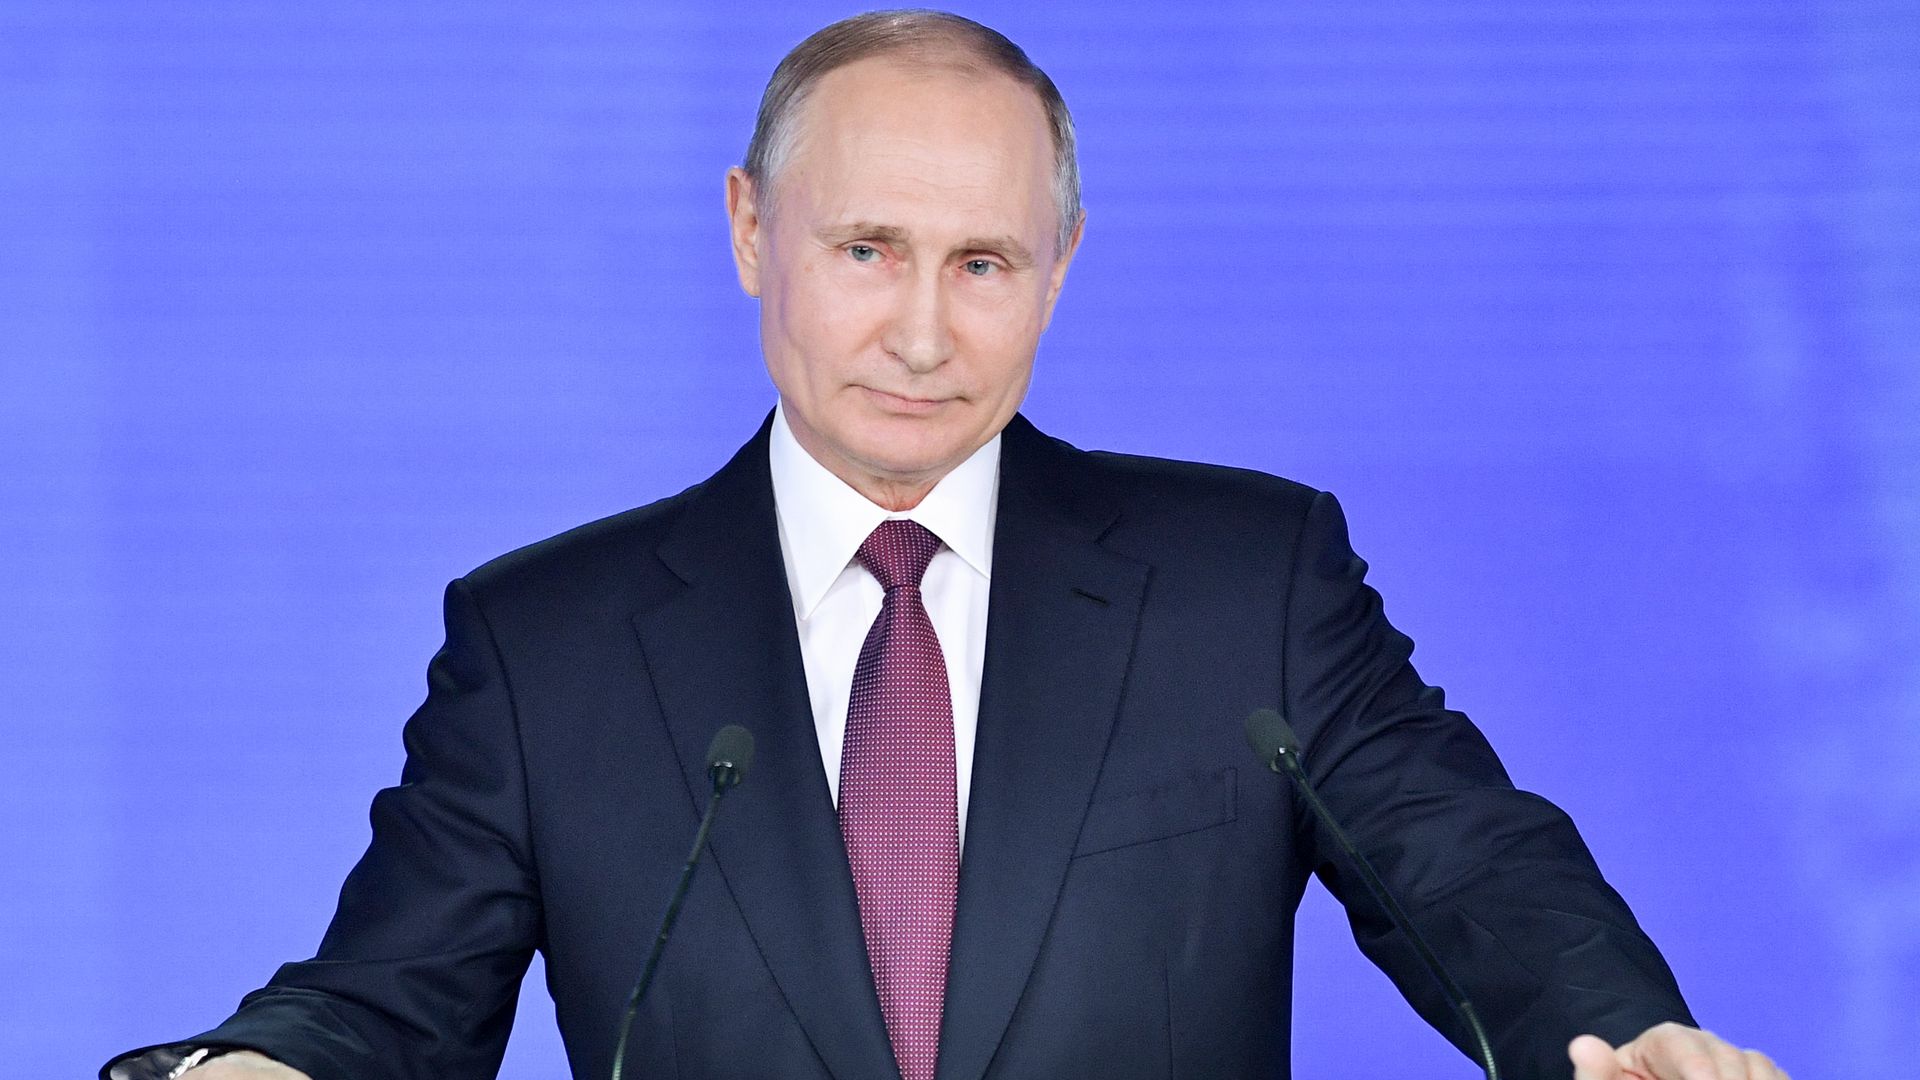 Vladimir Putin at lectern